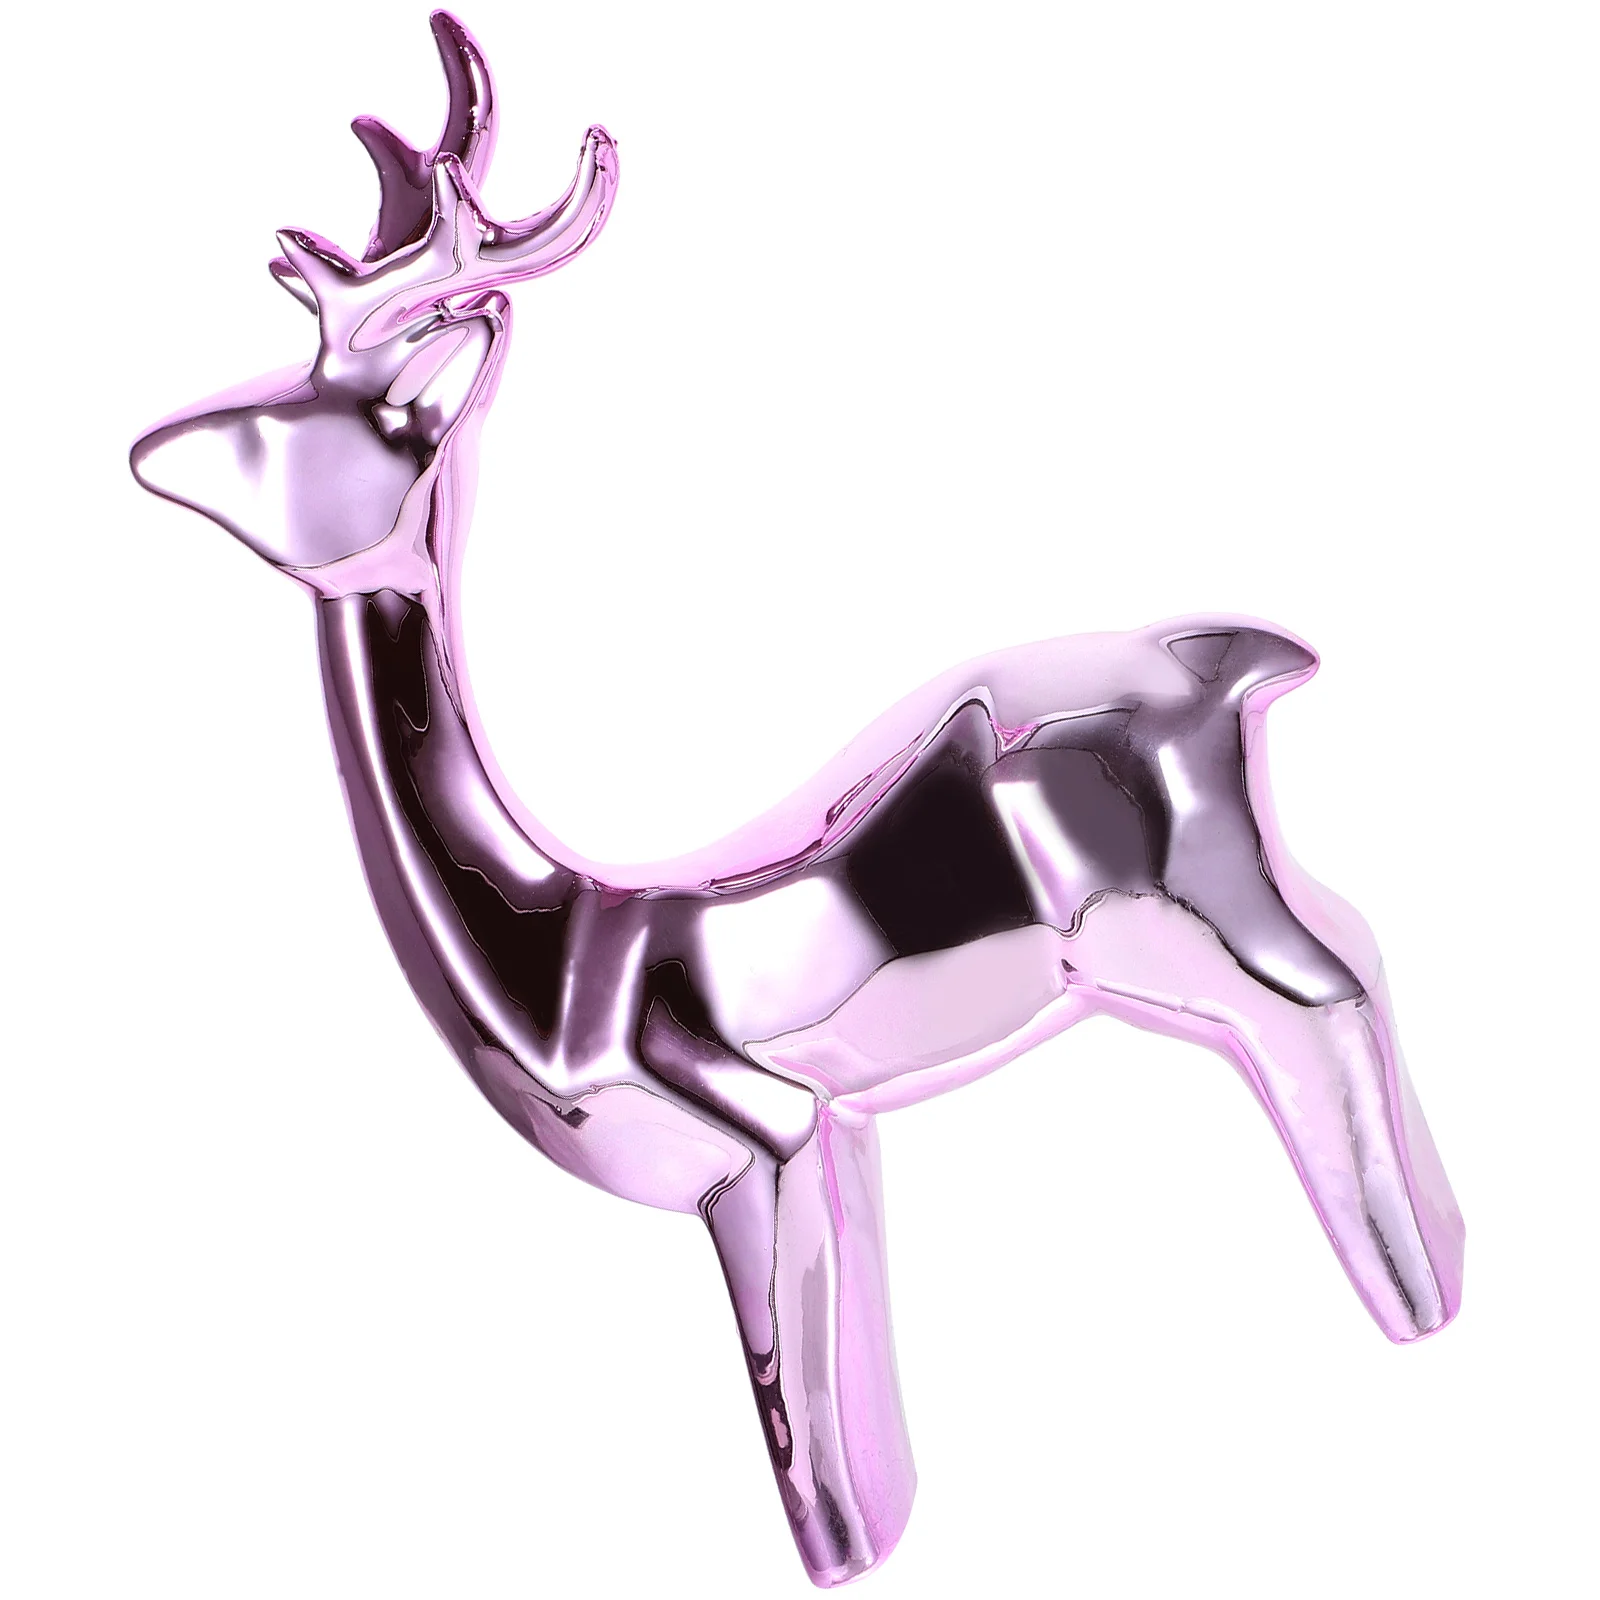 

Ceramic Deer Ornament Home Decor Ornaments Animal Statue Figurine Adorns Ceramics Figurines Desktop